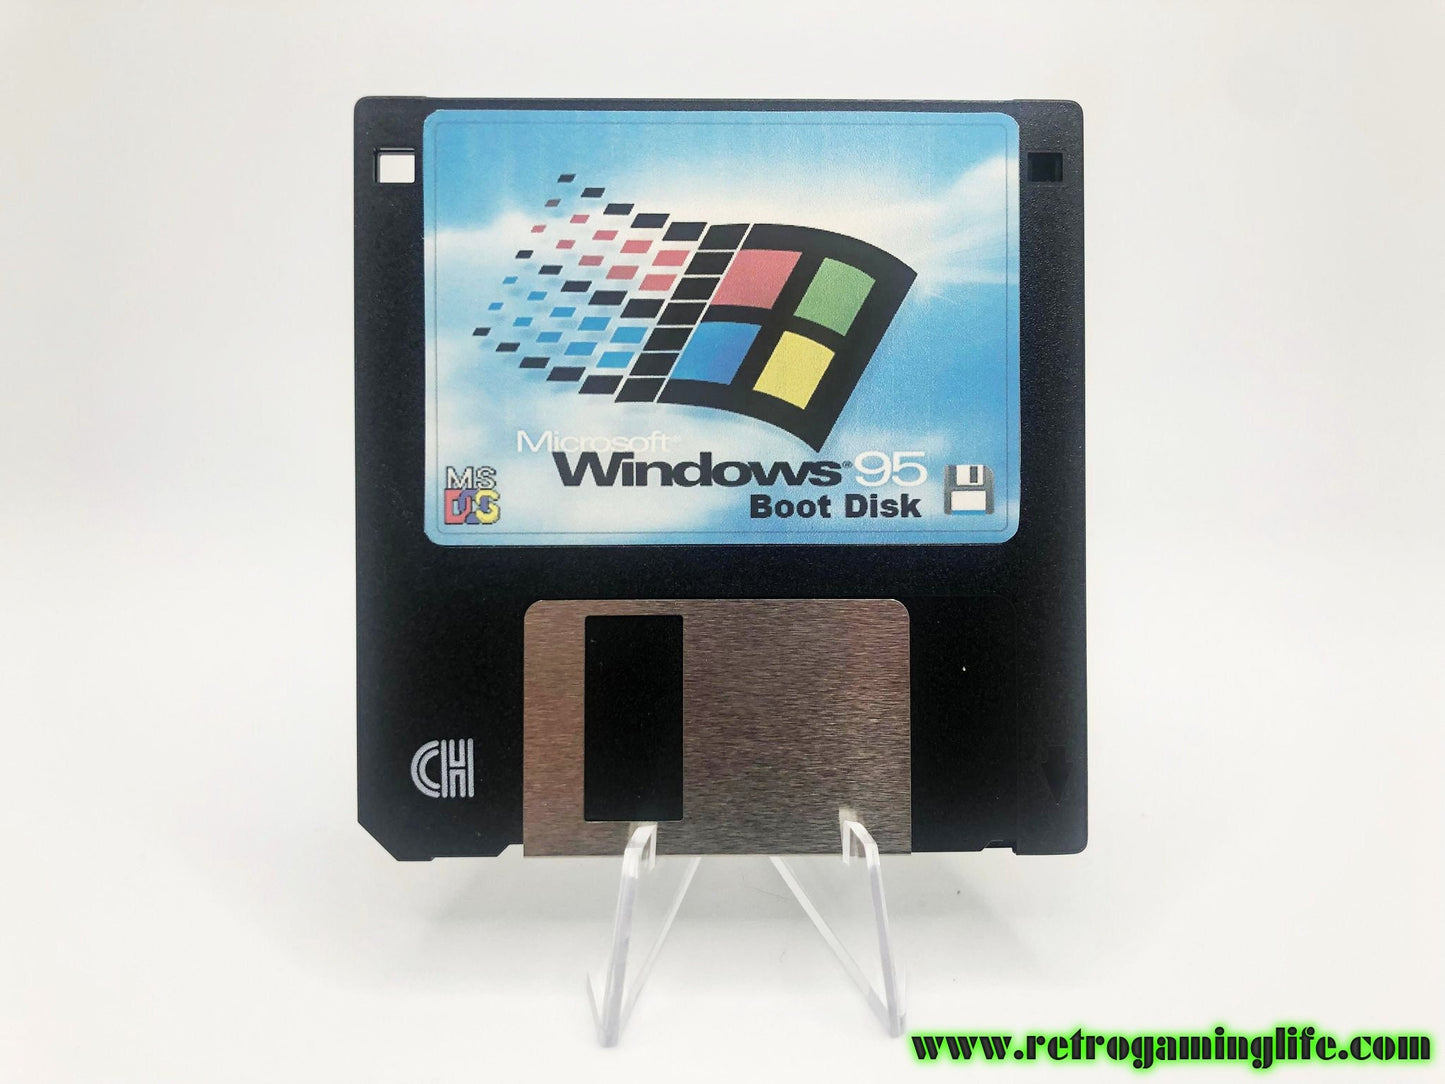 Windows 95 Boot Disk DOS PC Floppy